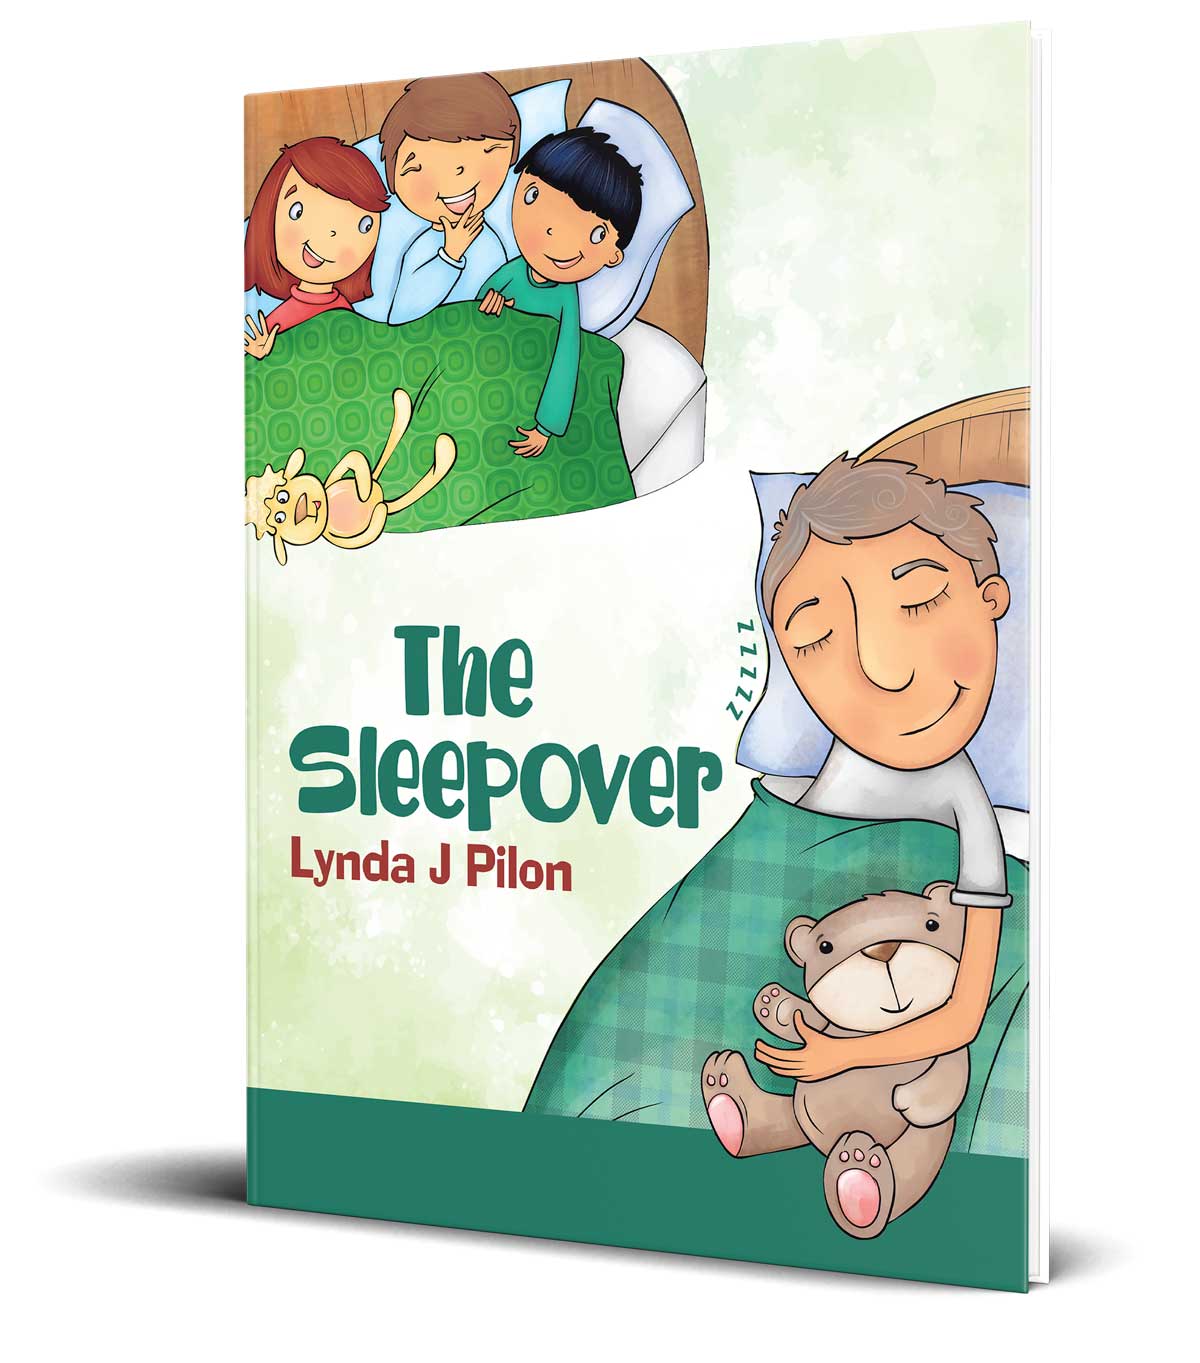 The Sleepover by Lynda Pilon, children's book